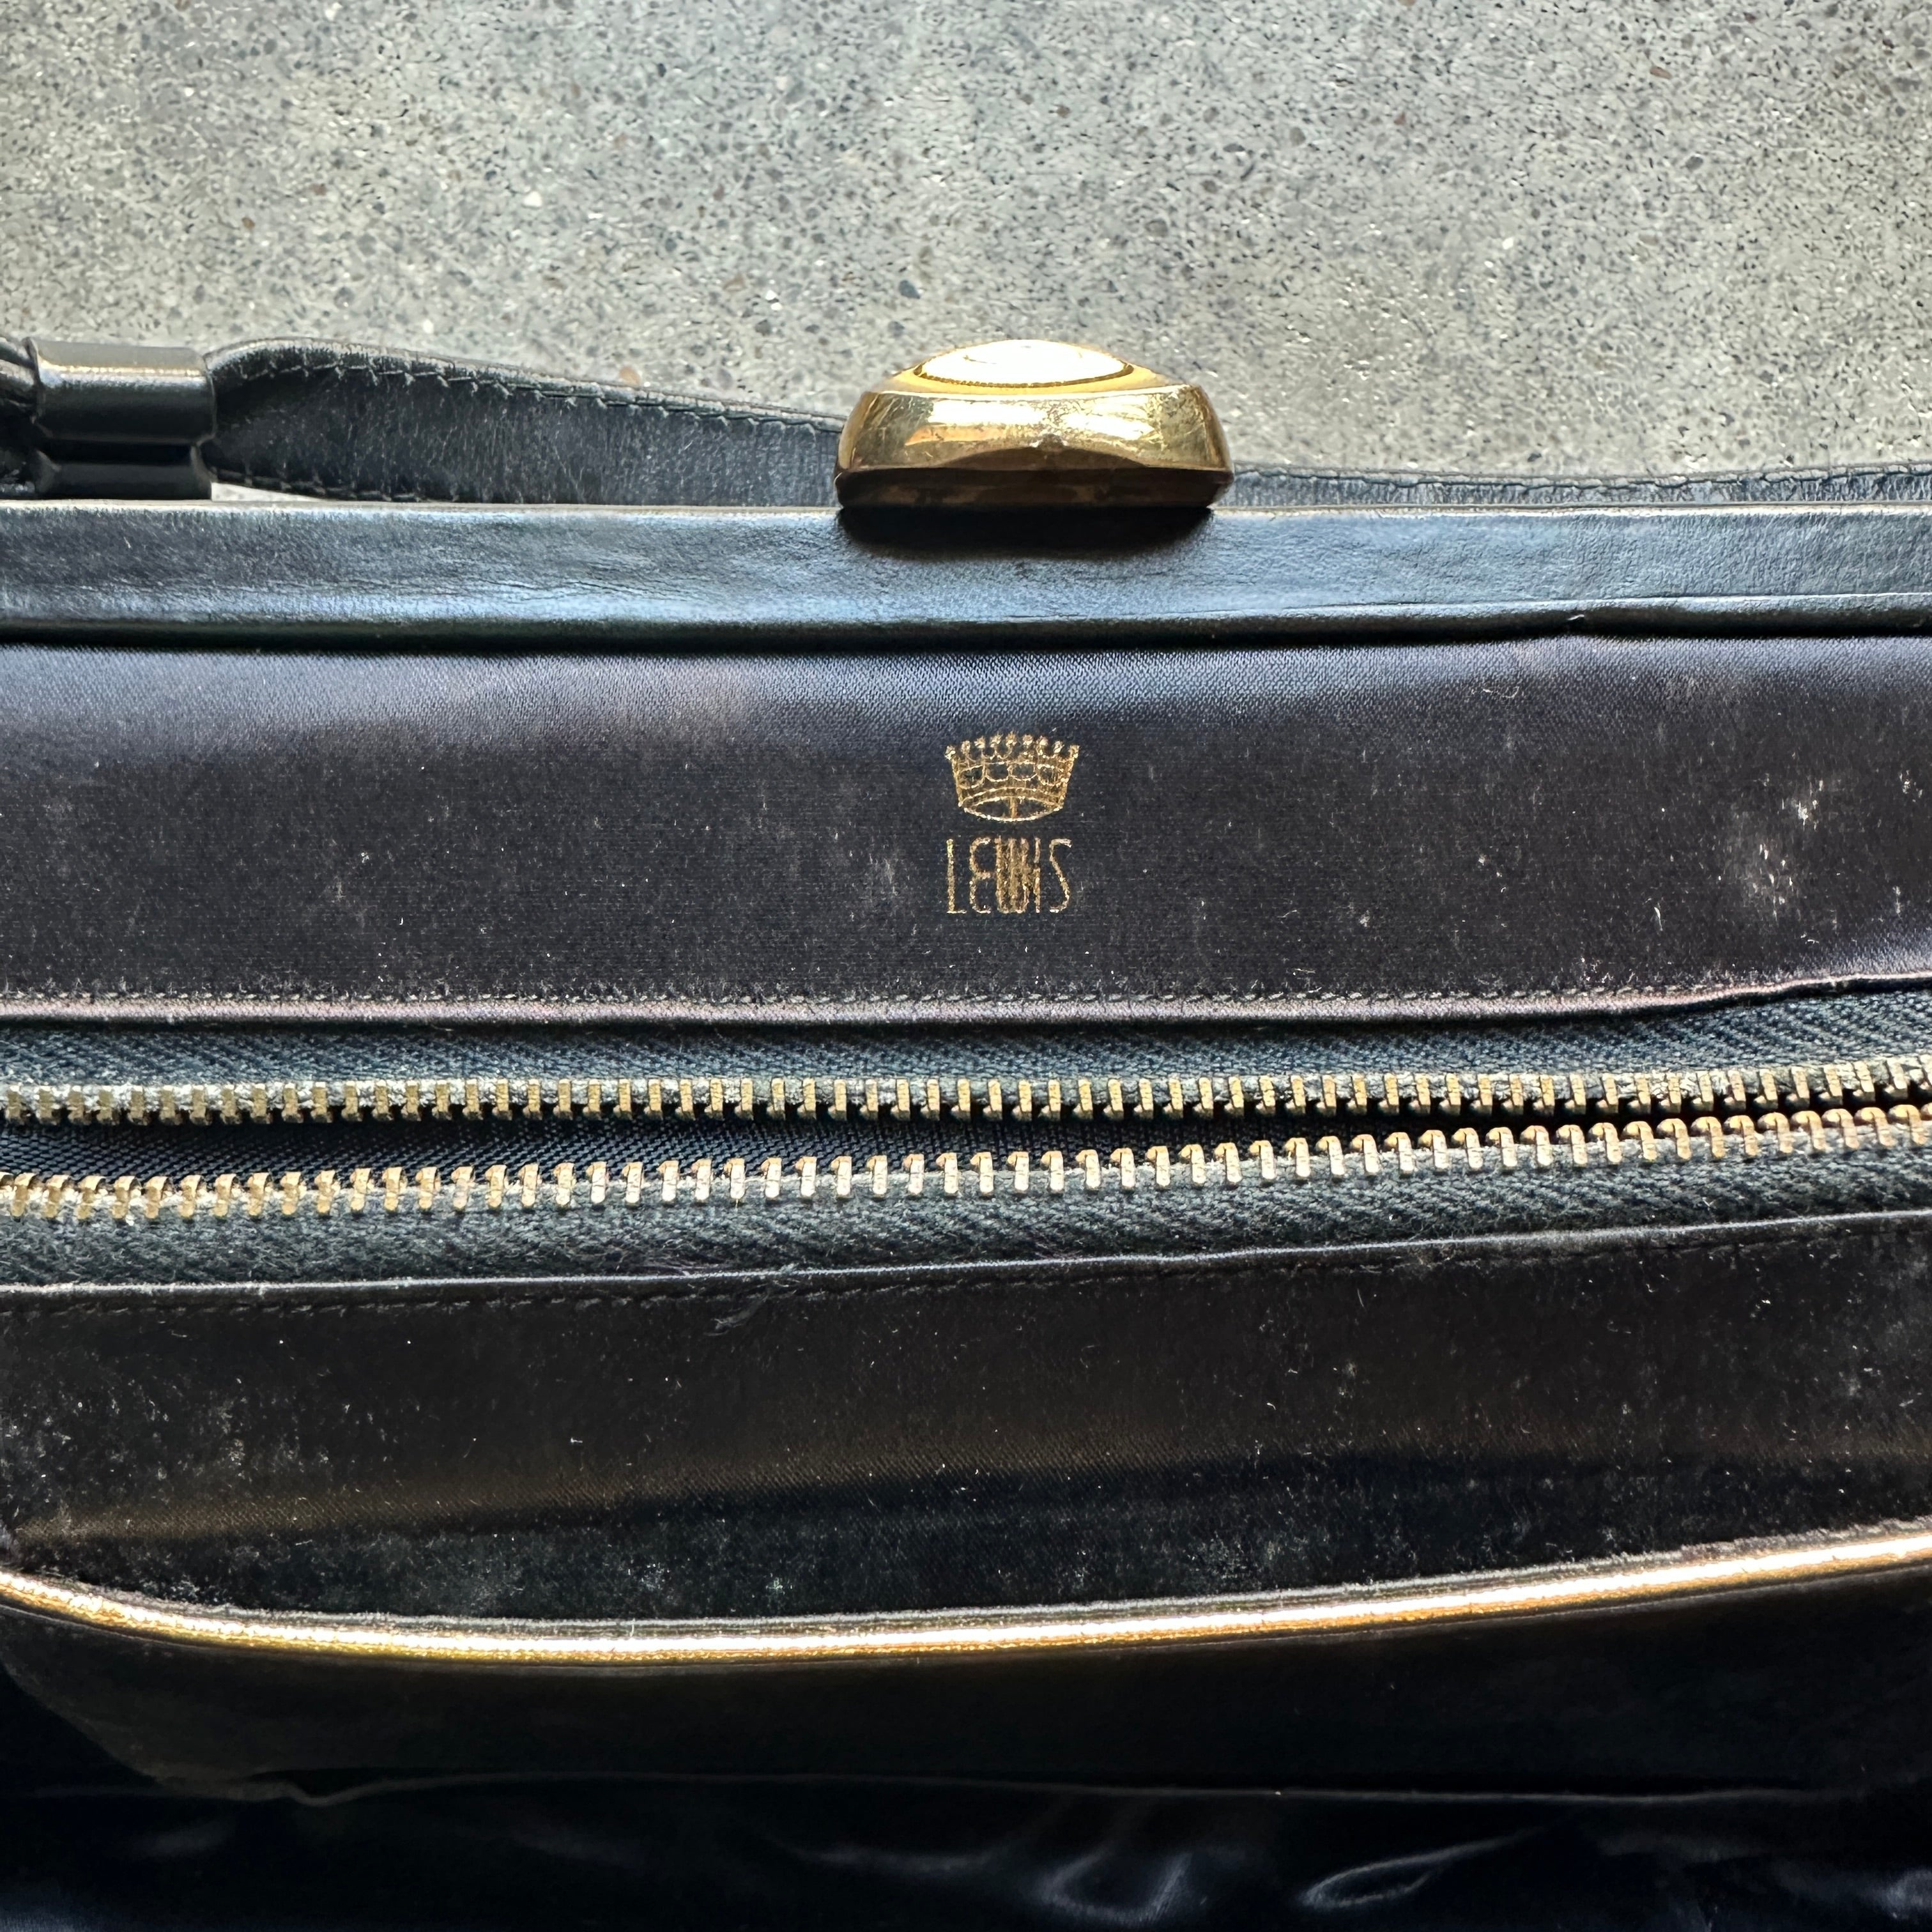 Vintage “Crown Lewis” Black Floral Brocade Handbag